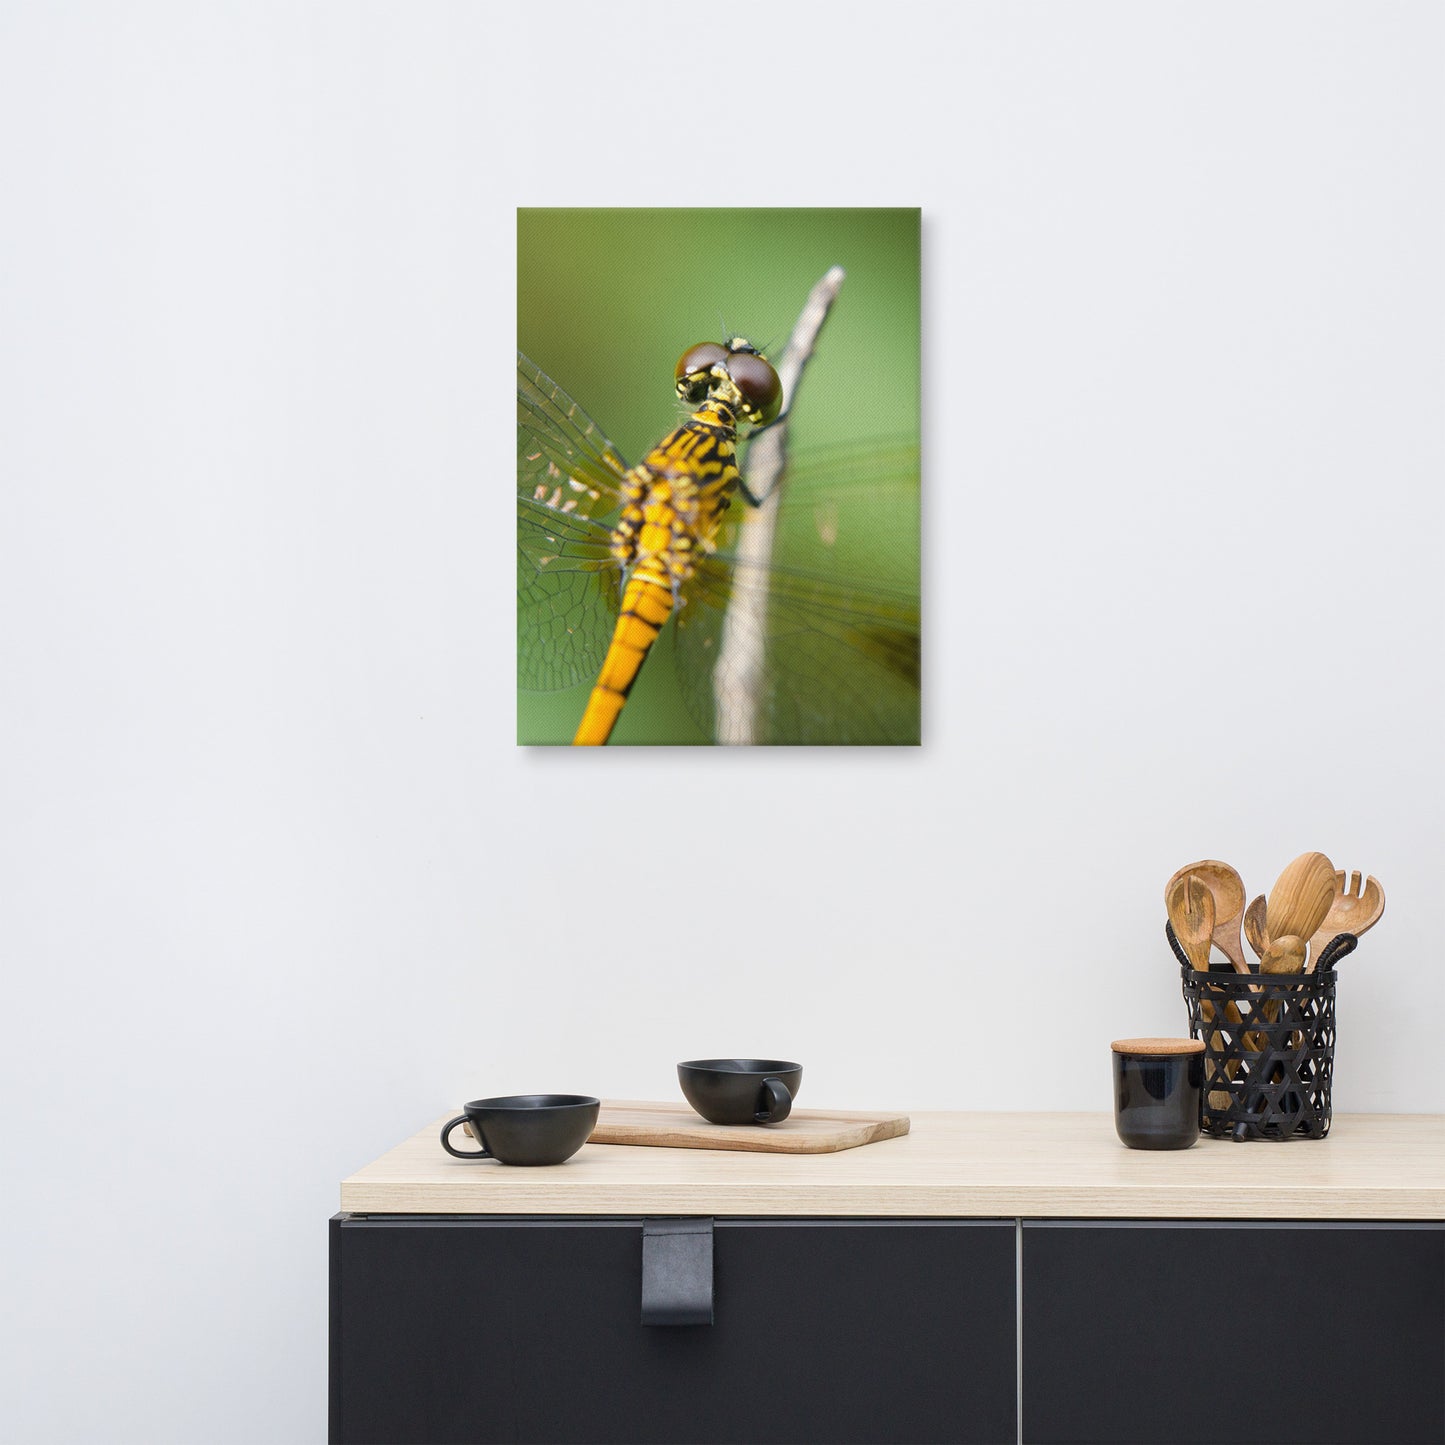 Dragonfly at Bombay Hook Animal / Wildlife Photograph Canvas Wall Art Prints